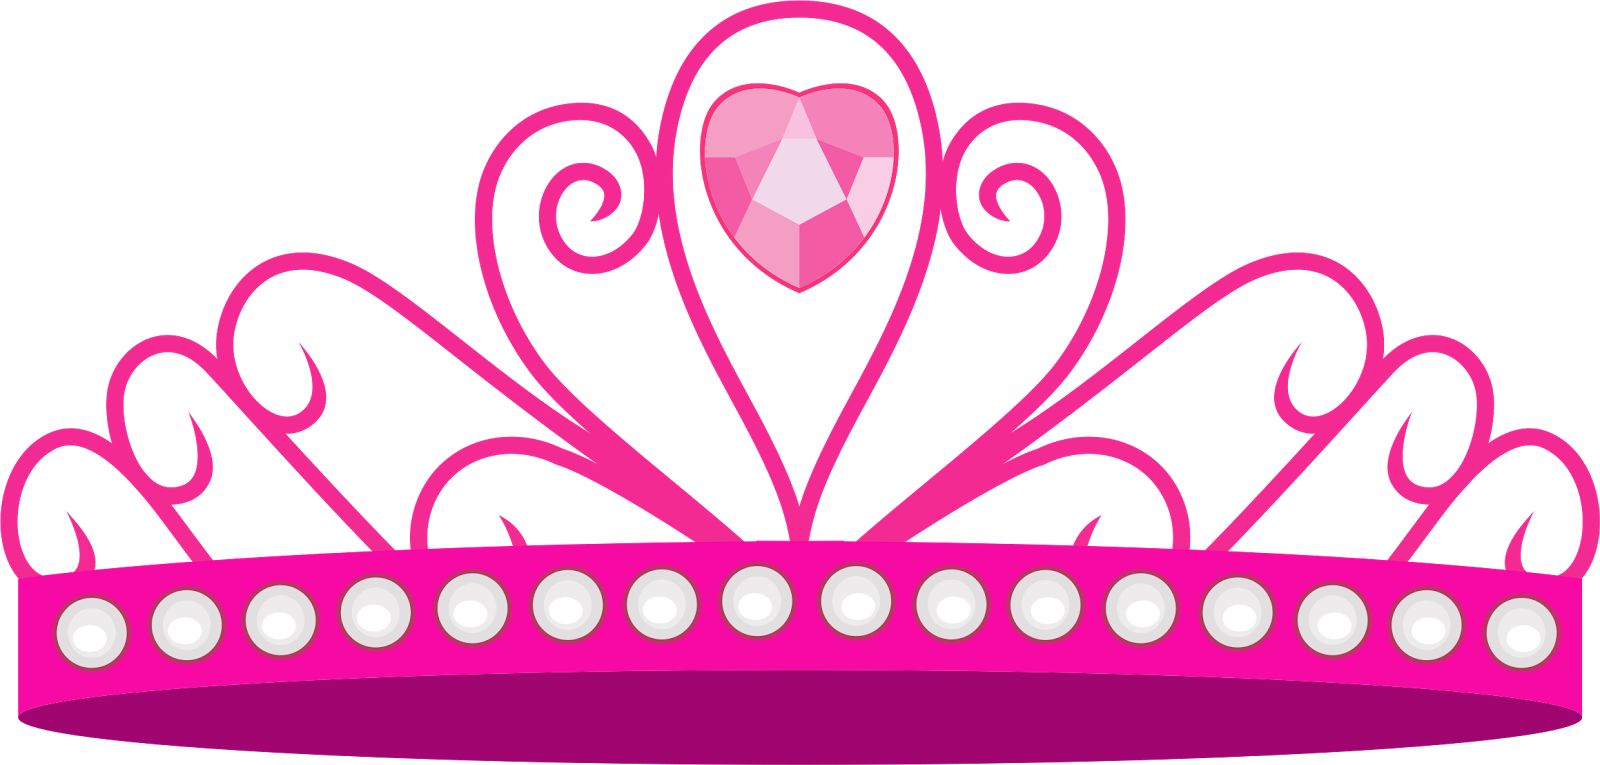 Crown Disney Princess Clip art - crown png download - 1600*765 - Free